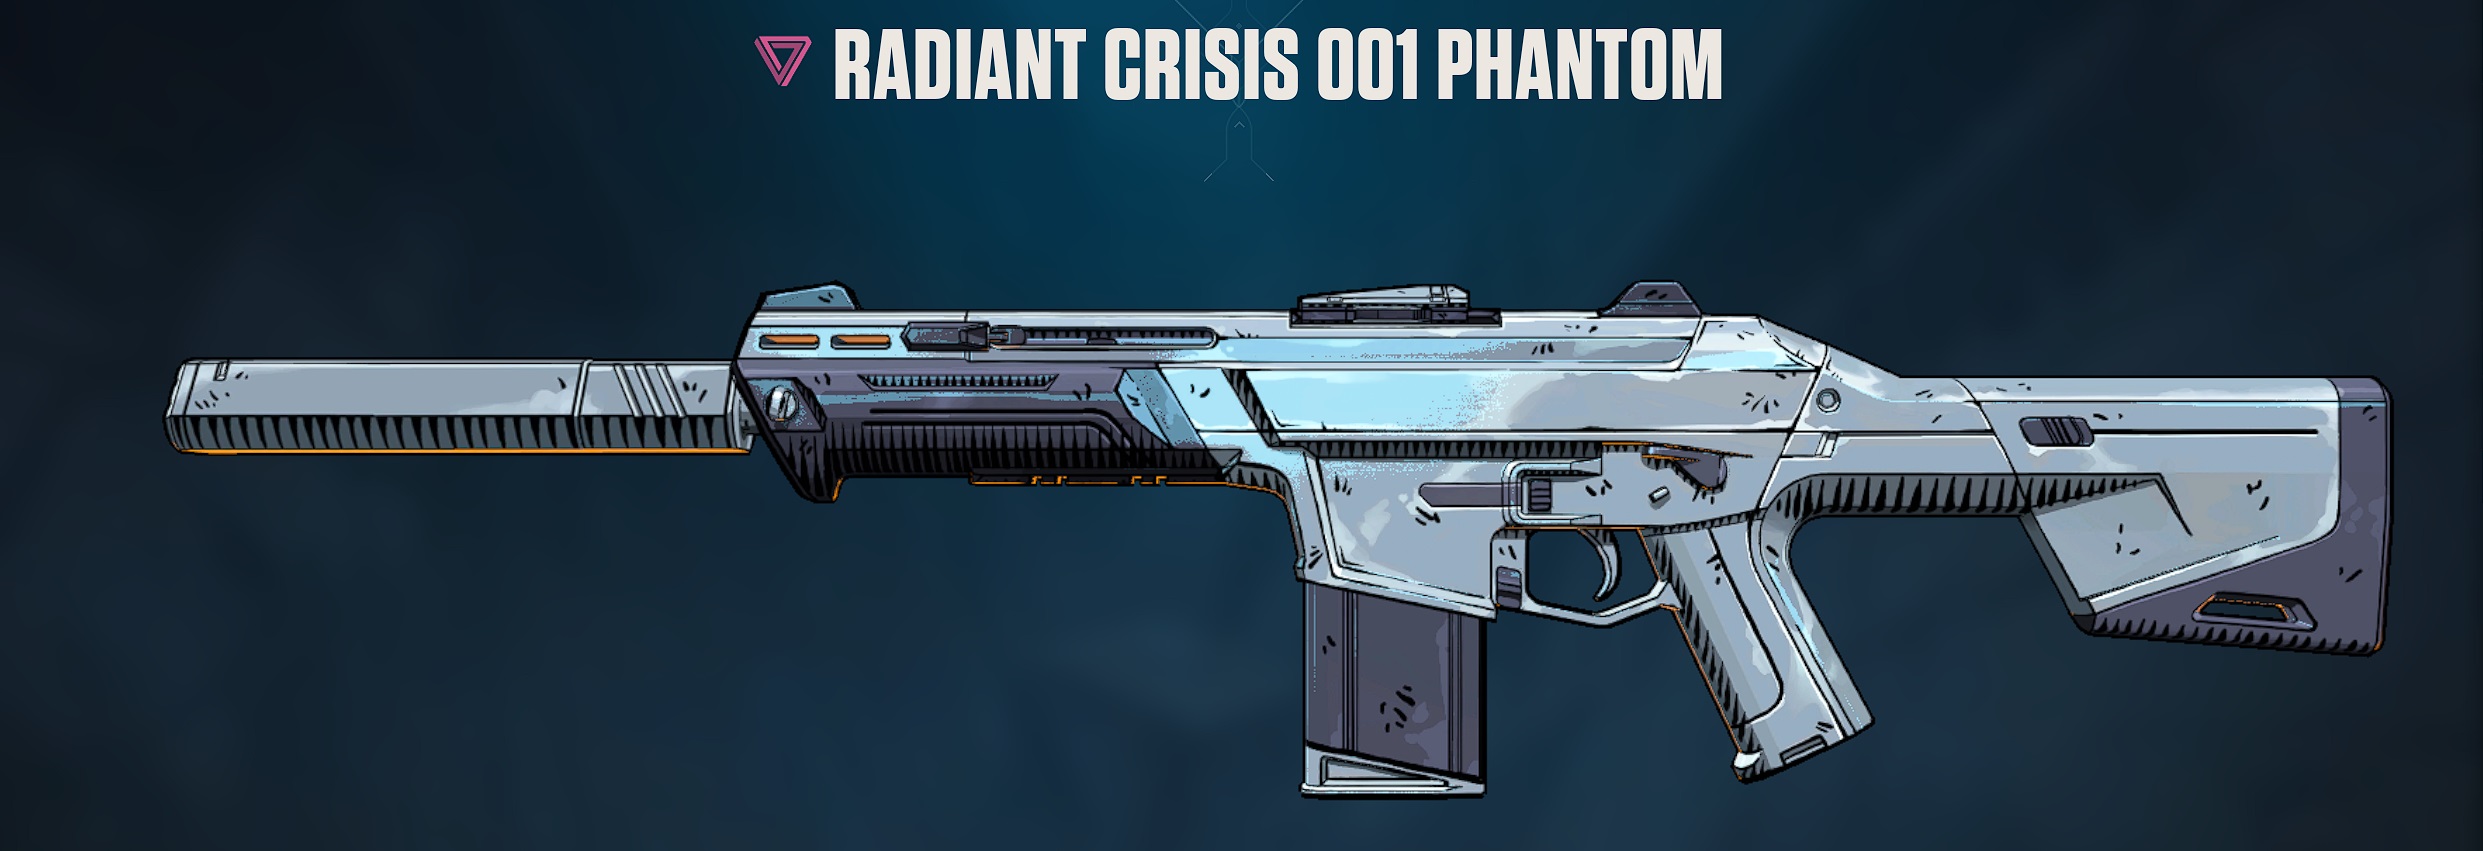 Radiant Crisis 001 Phantom - Screenshot